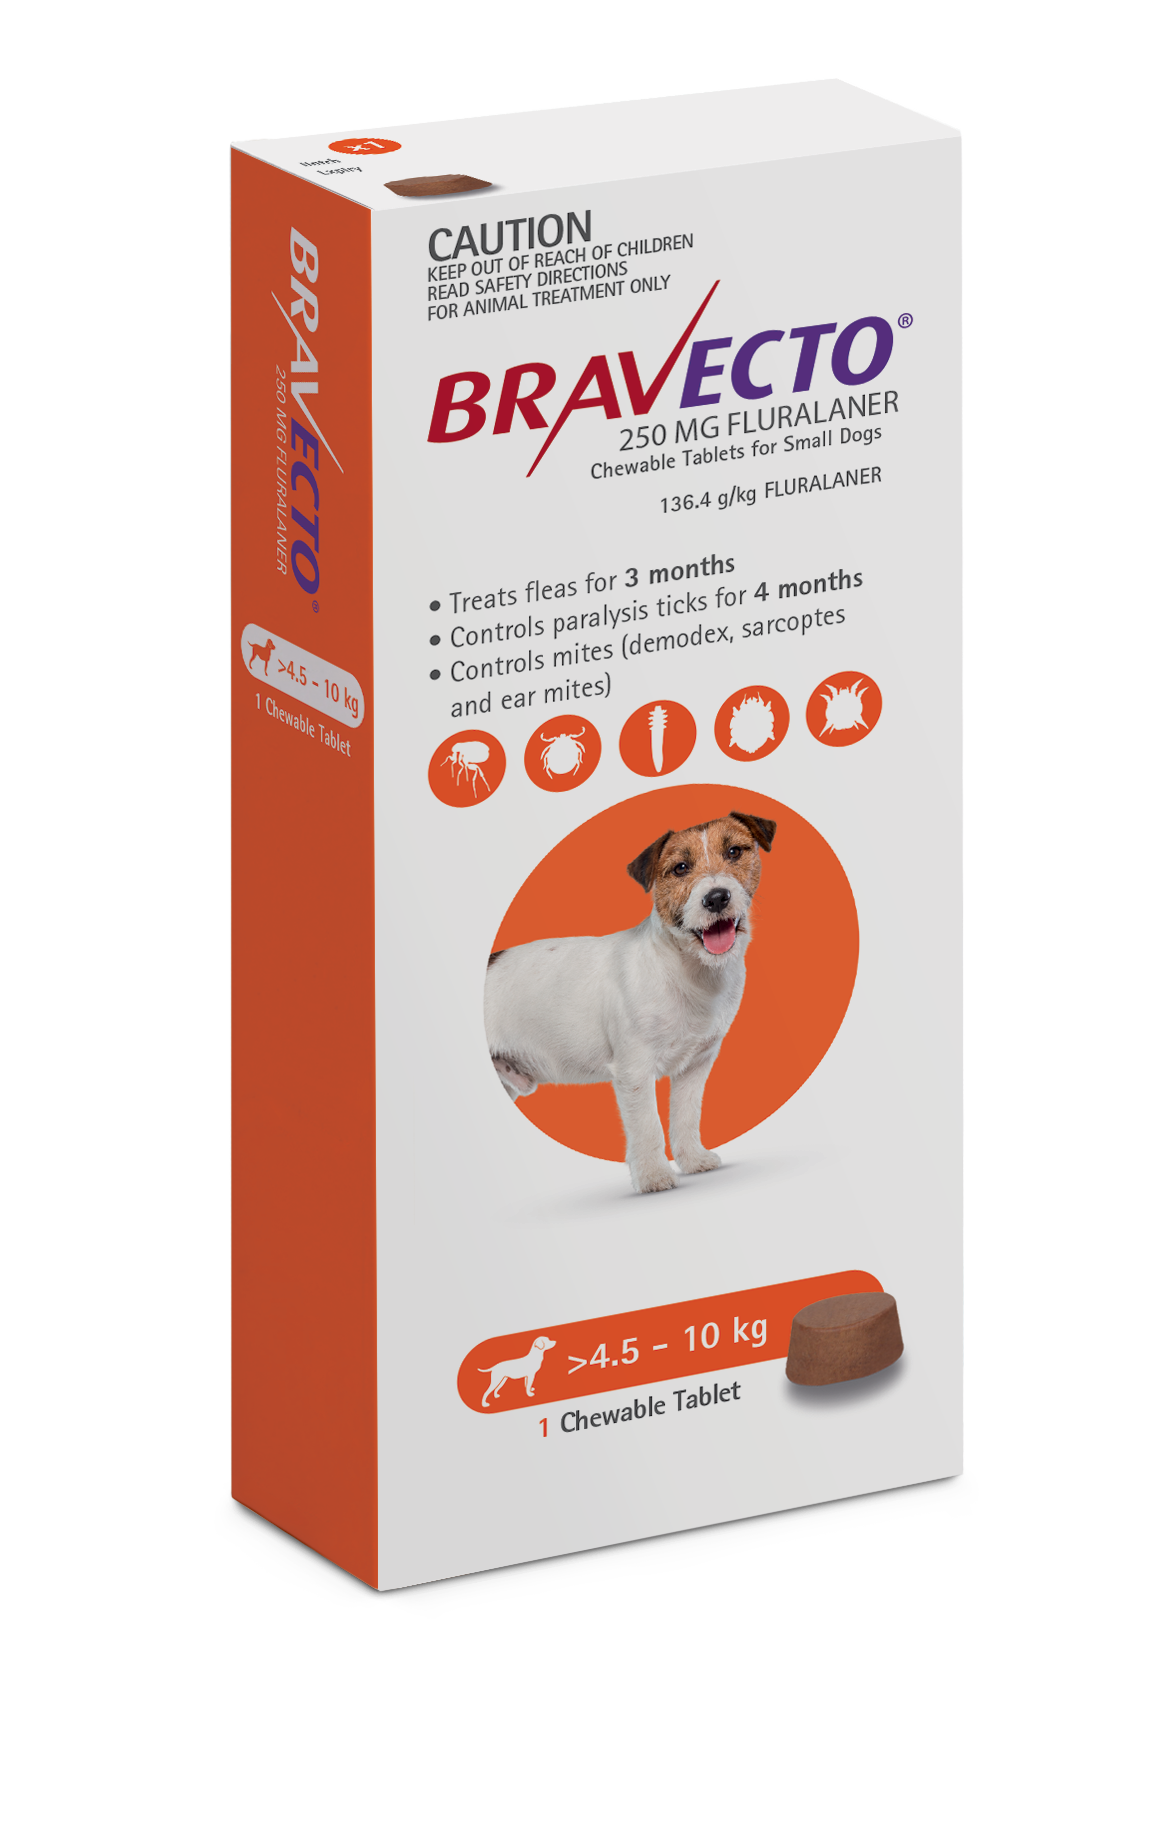 Bravecto Dog S 4.5-10KG